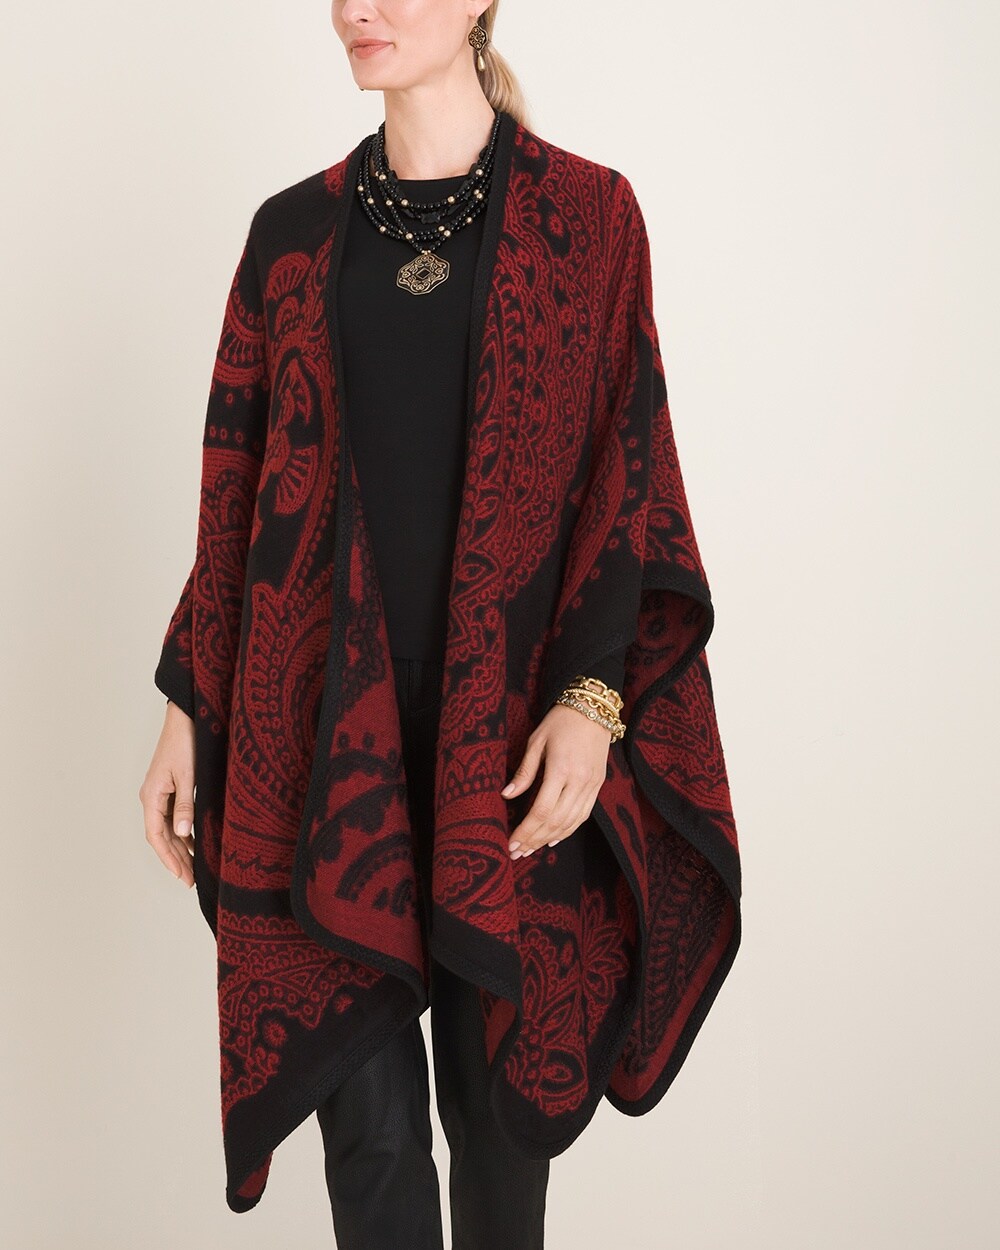 Red and Black Paisley Jacquard Blanket Ruana Wrap